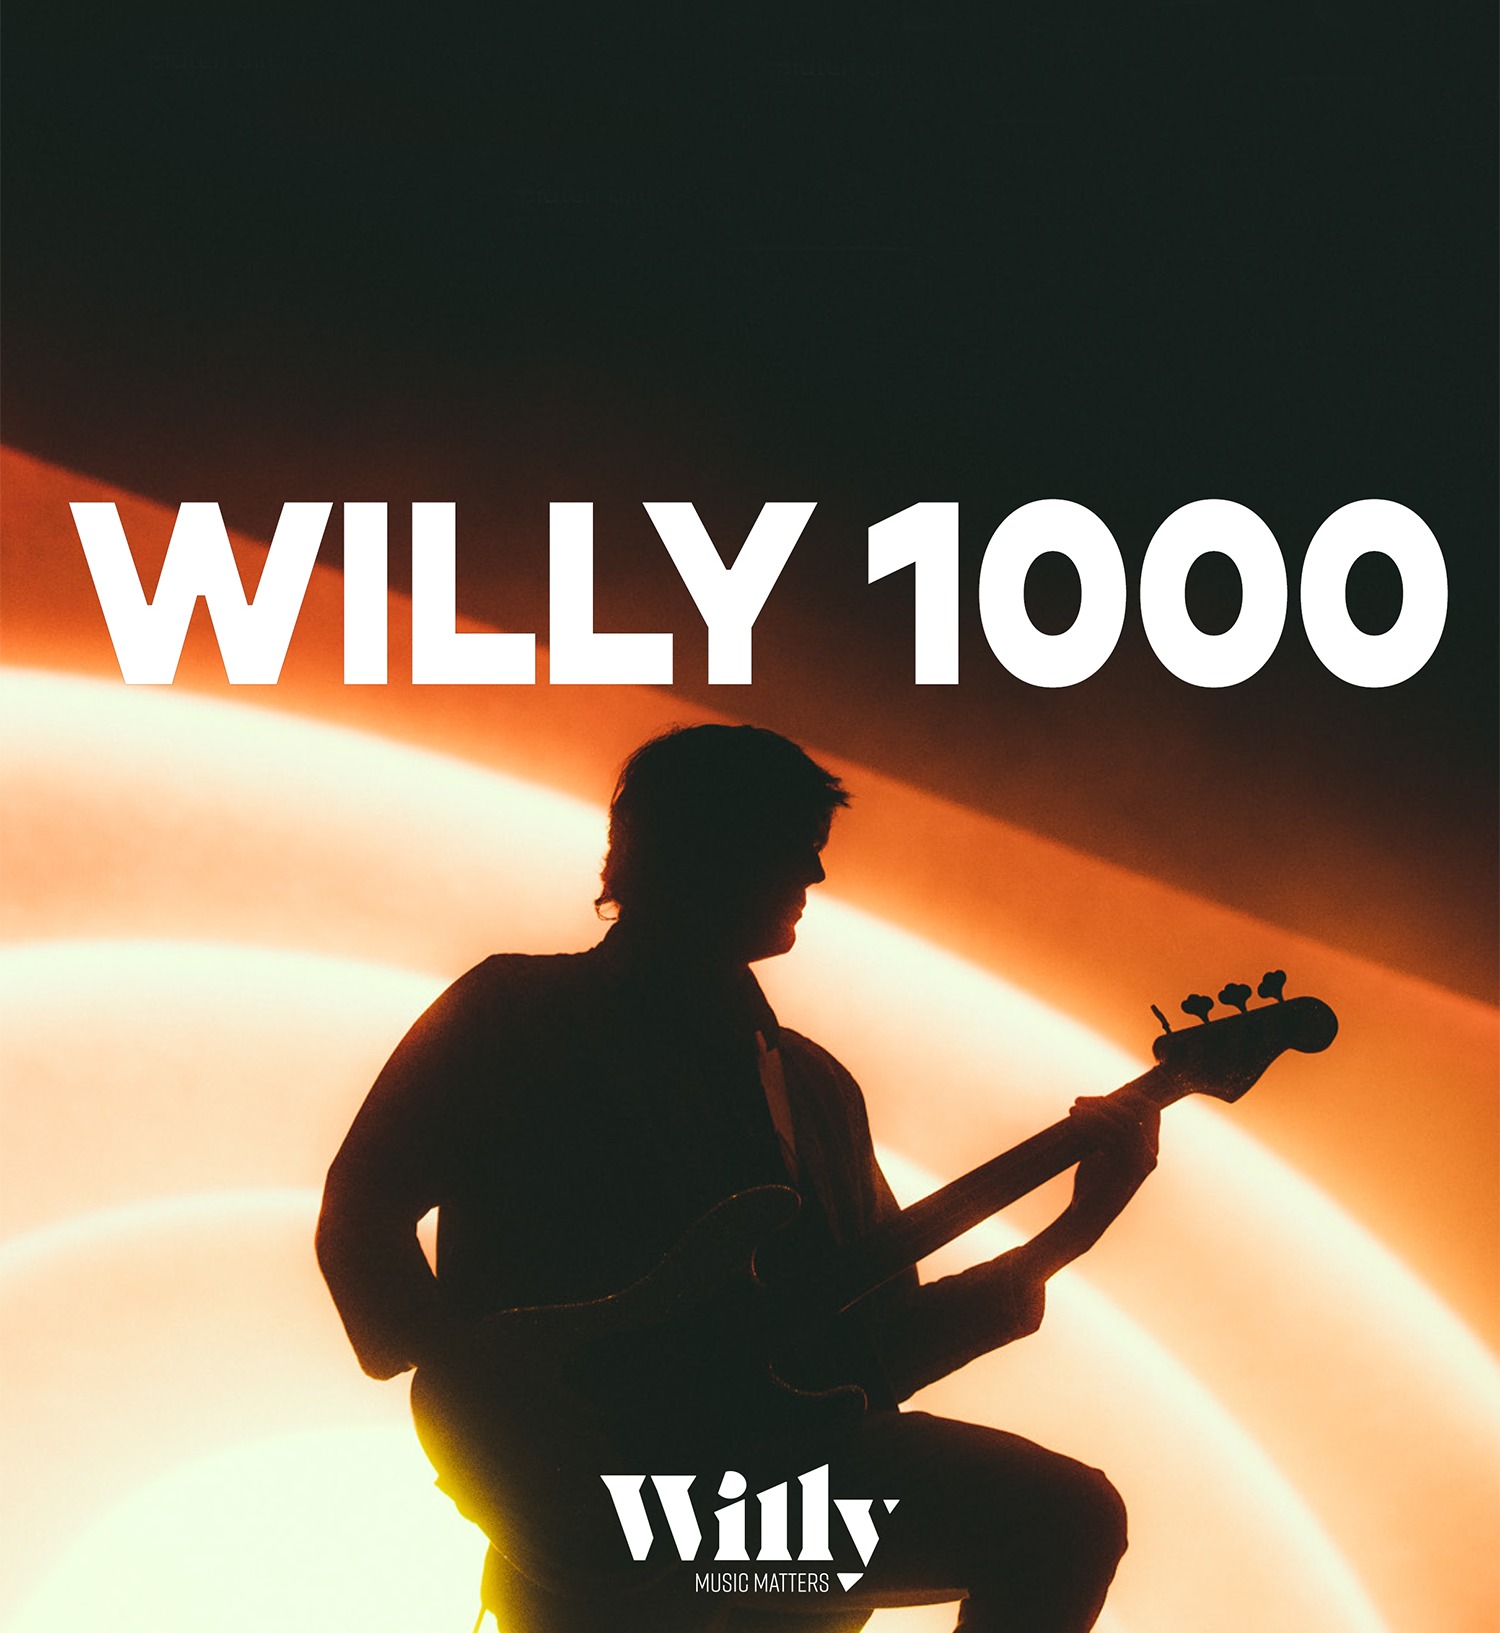 Willy 1000 campagna v2